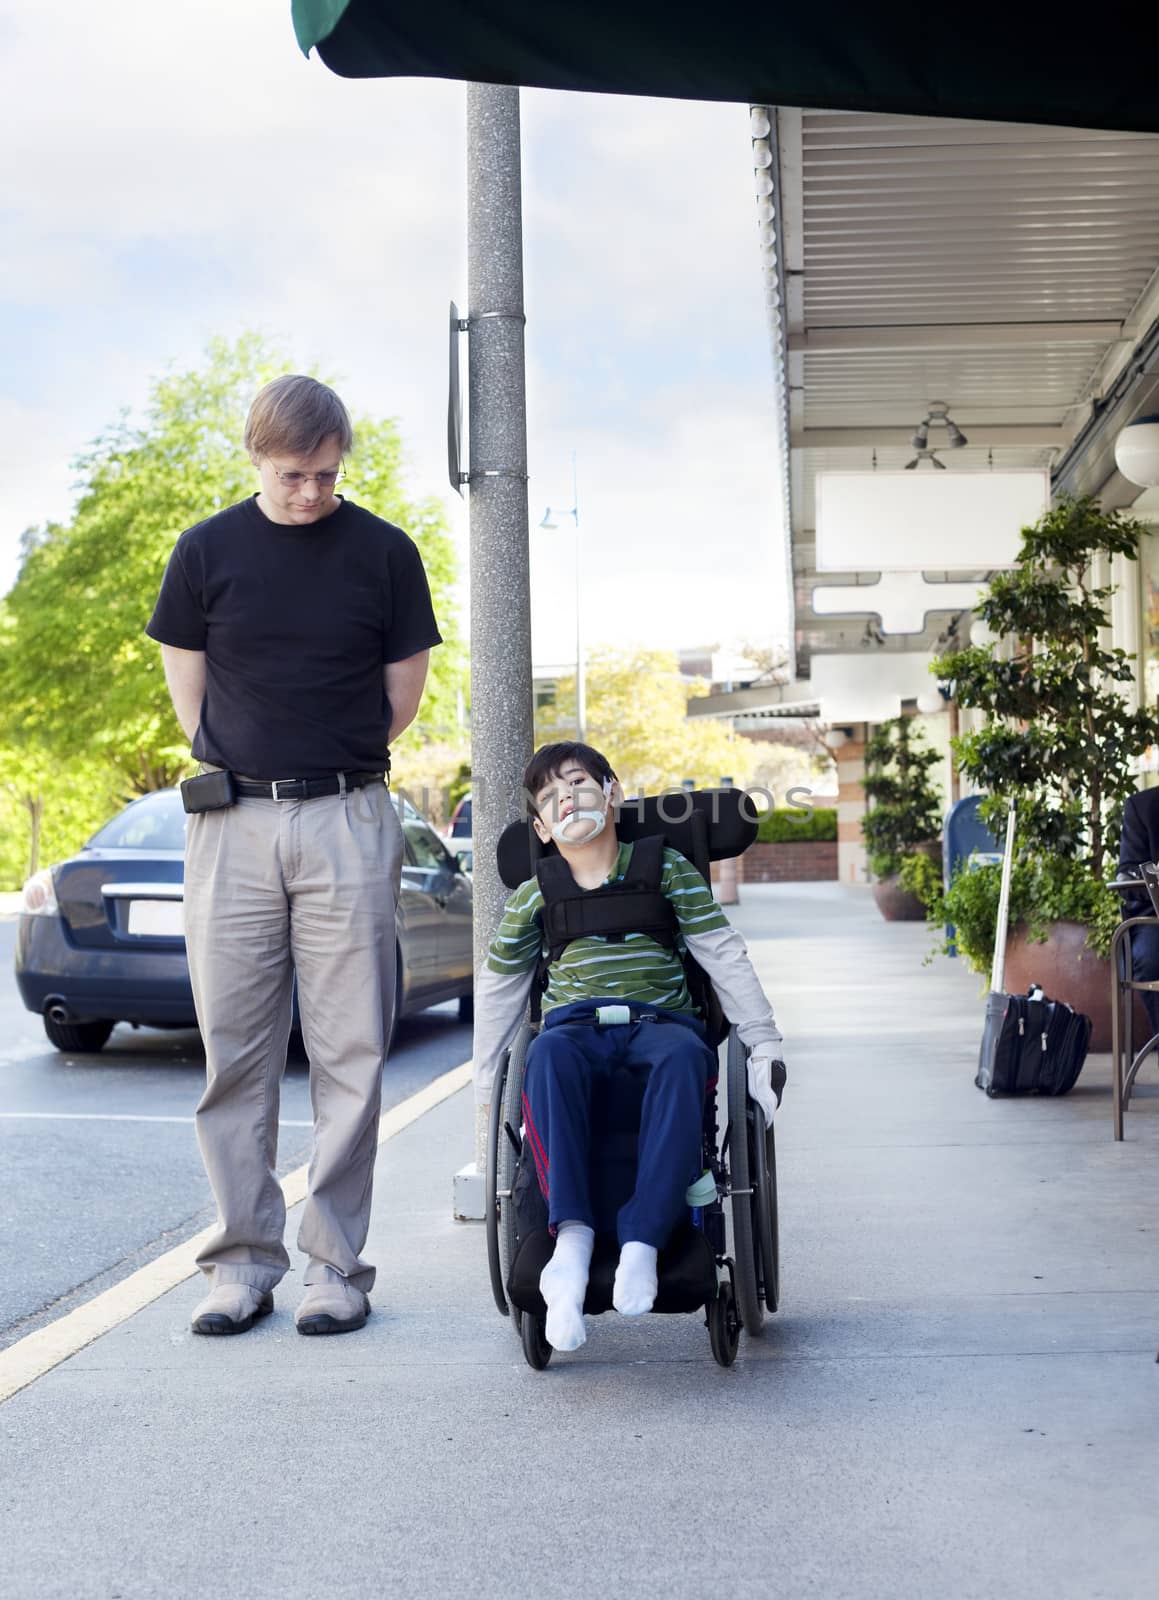 Father walking next to disabled son in wheelchair through town by jarenwicklund